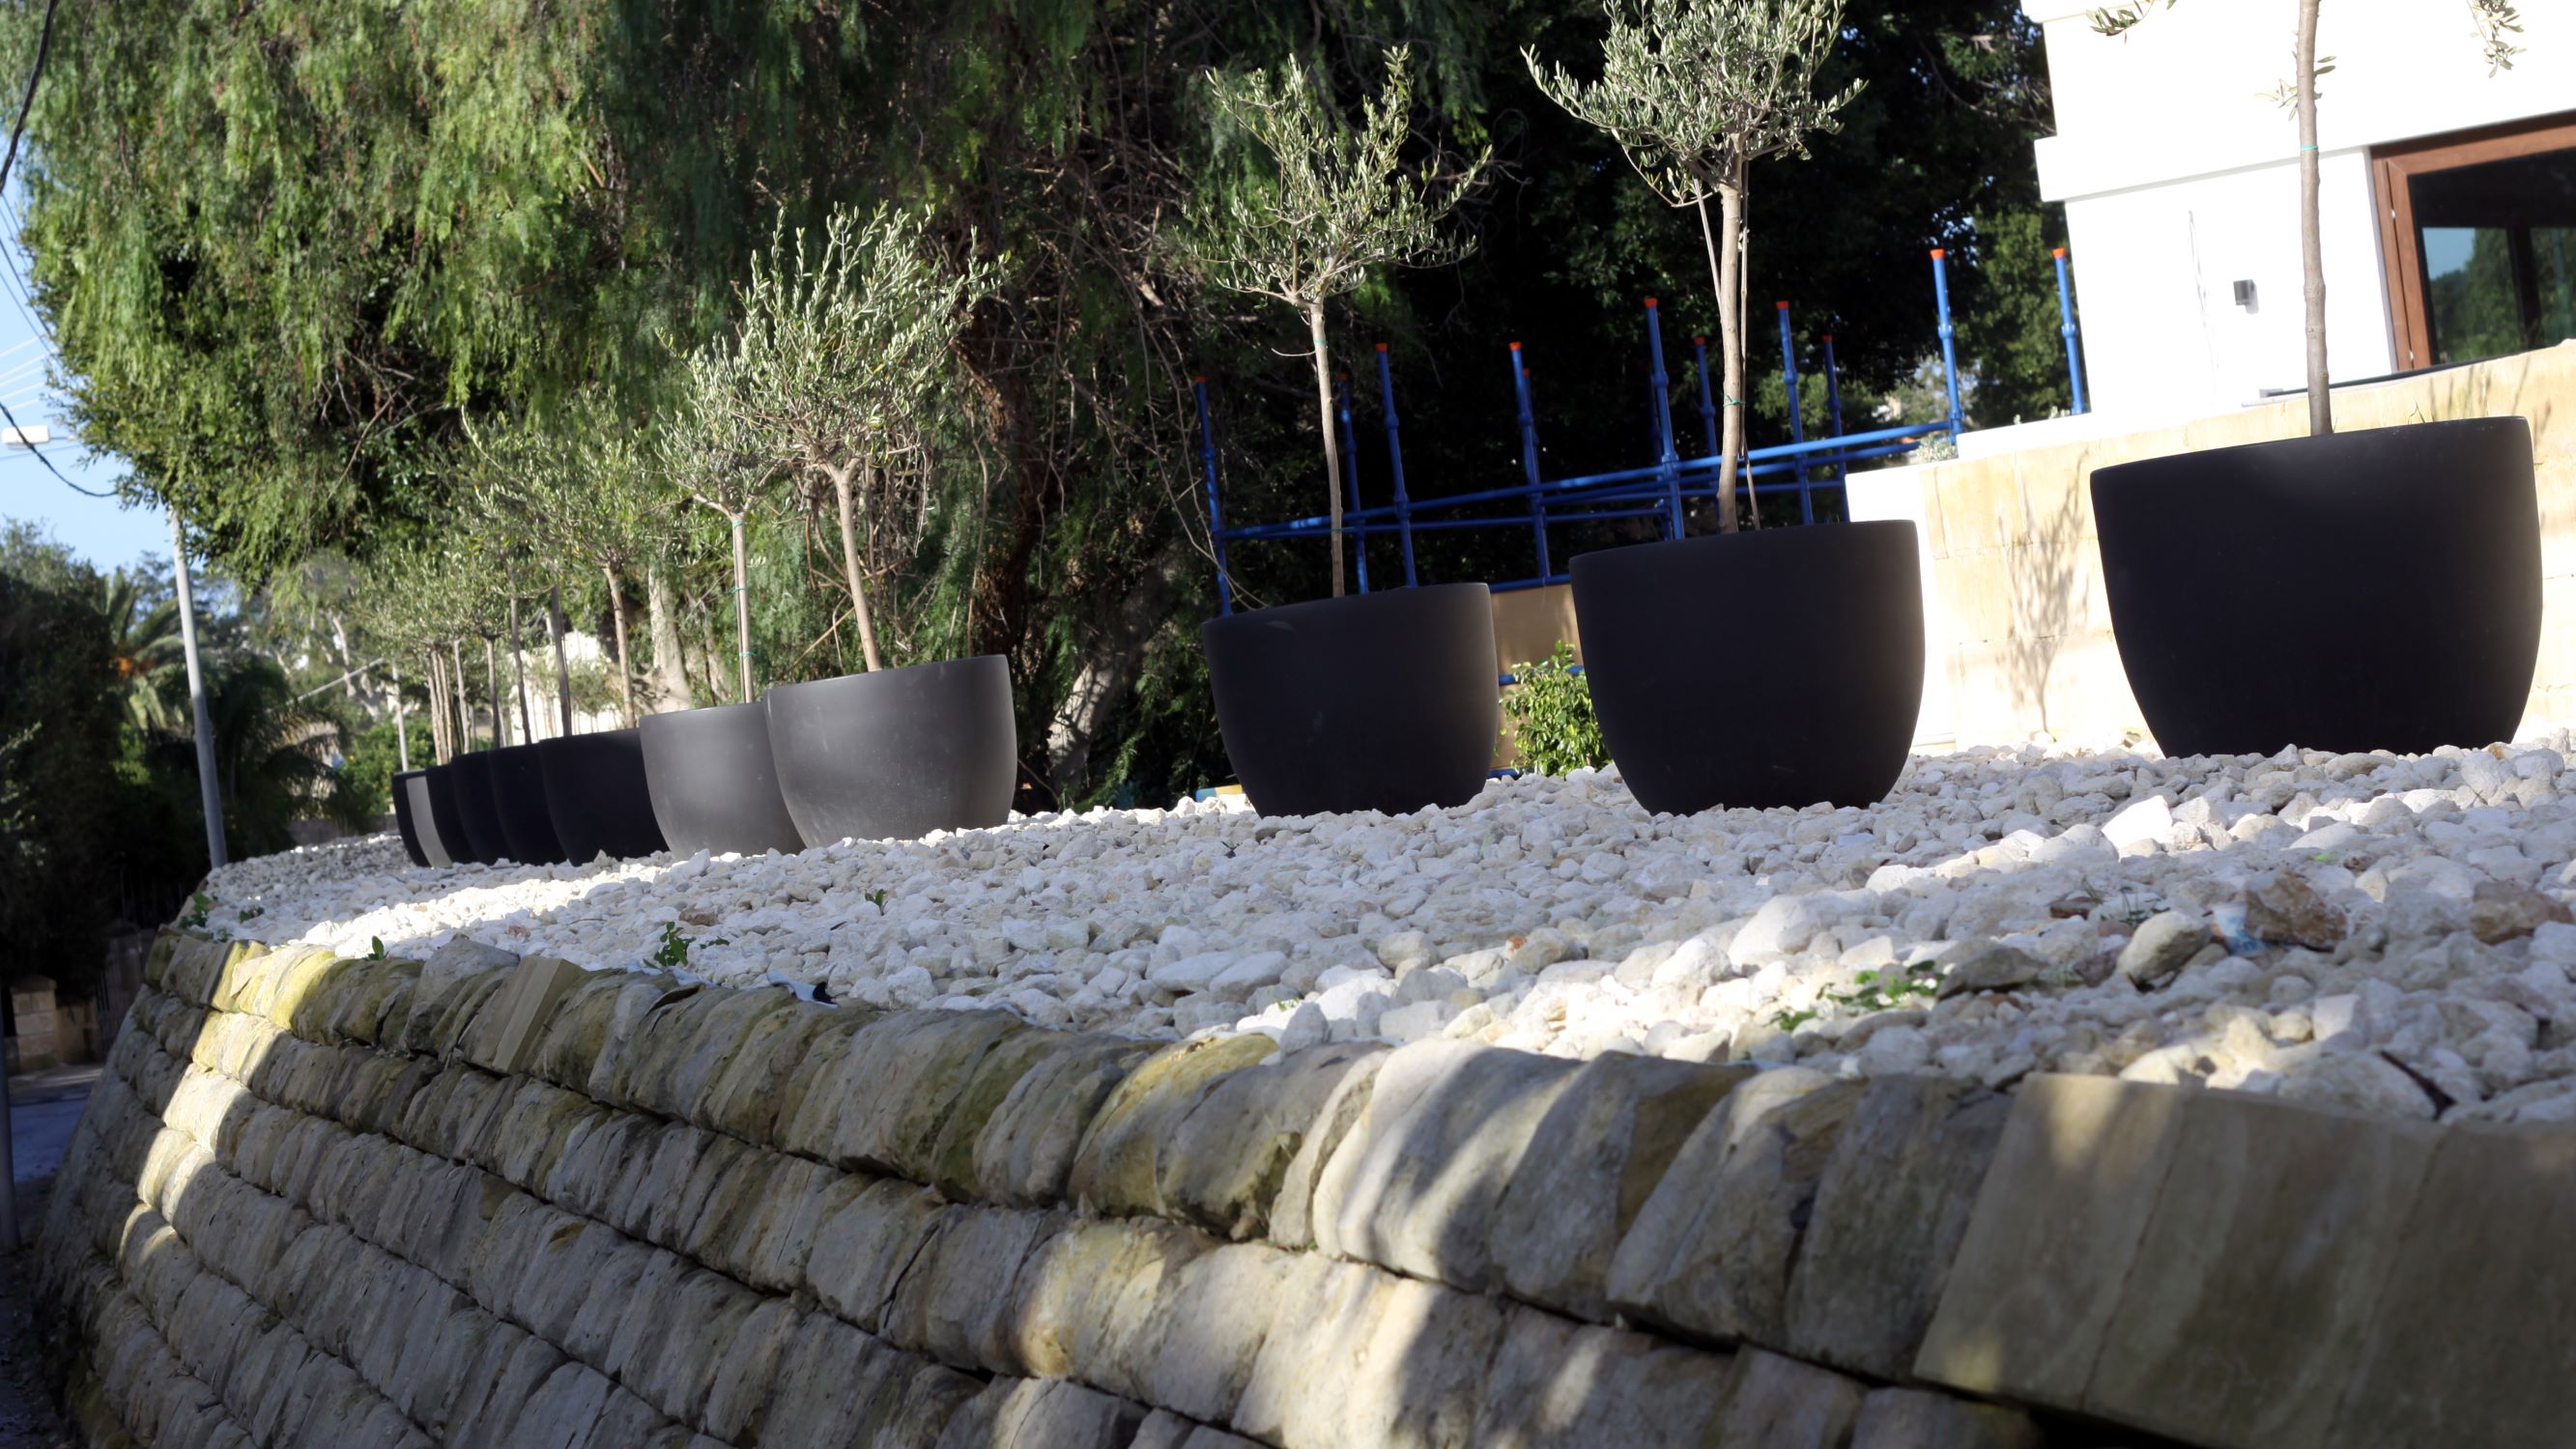 110 new olive trees for Attard’s historic railway embankment